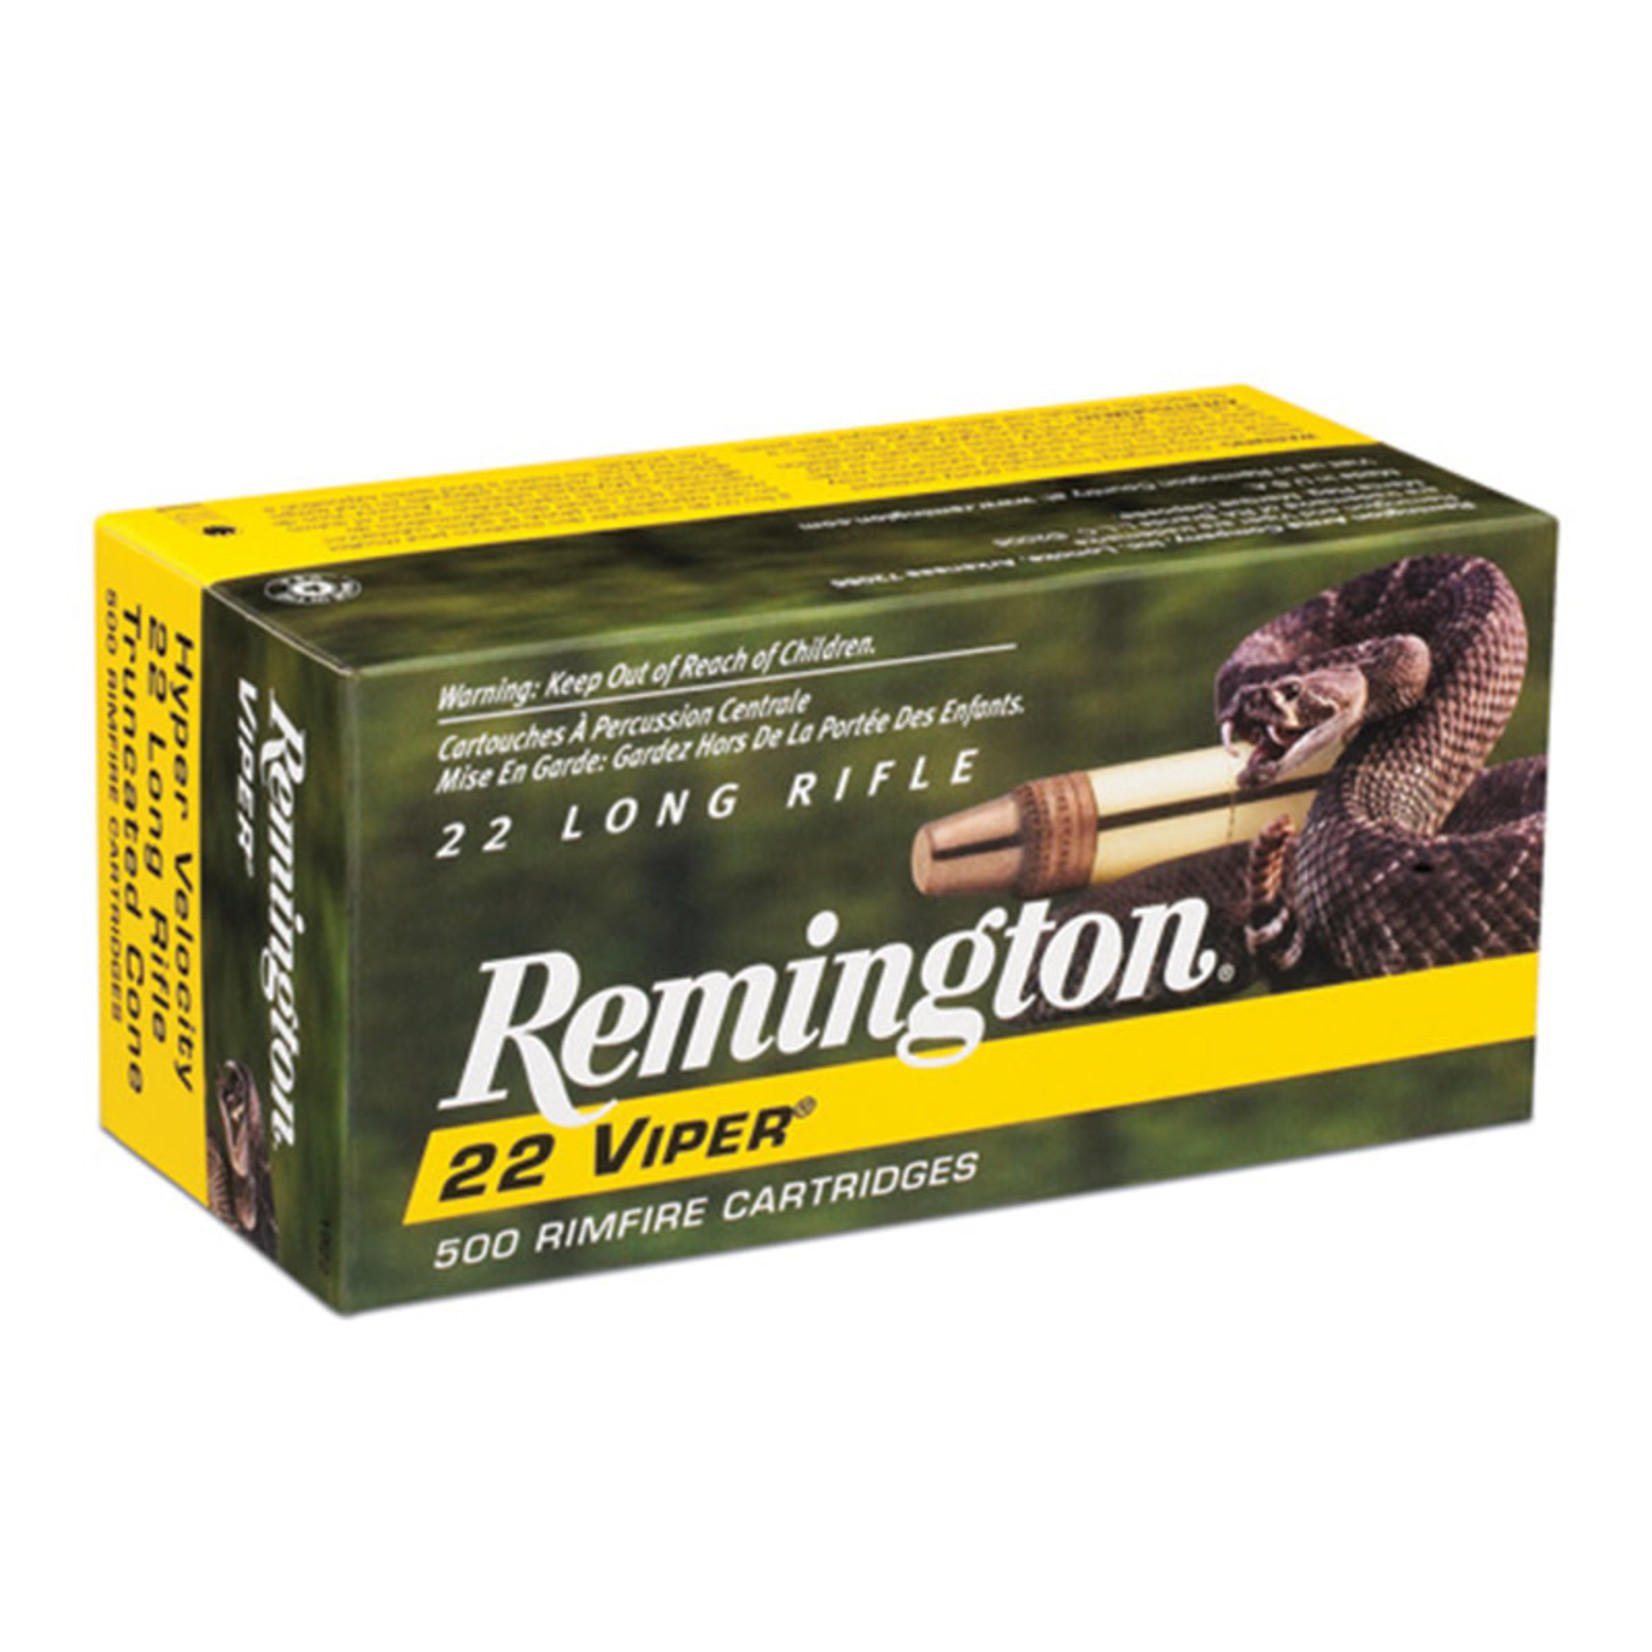 REMINGTON AMMUNITION Remington Ammo 22 Viper, 22 LR Hyper Velocity, 36 grain, Truncated Cone Hollow Point, 500 rd brick